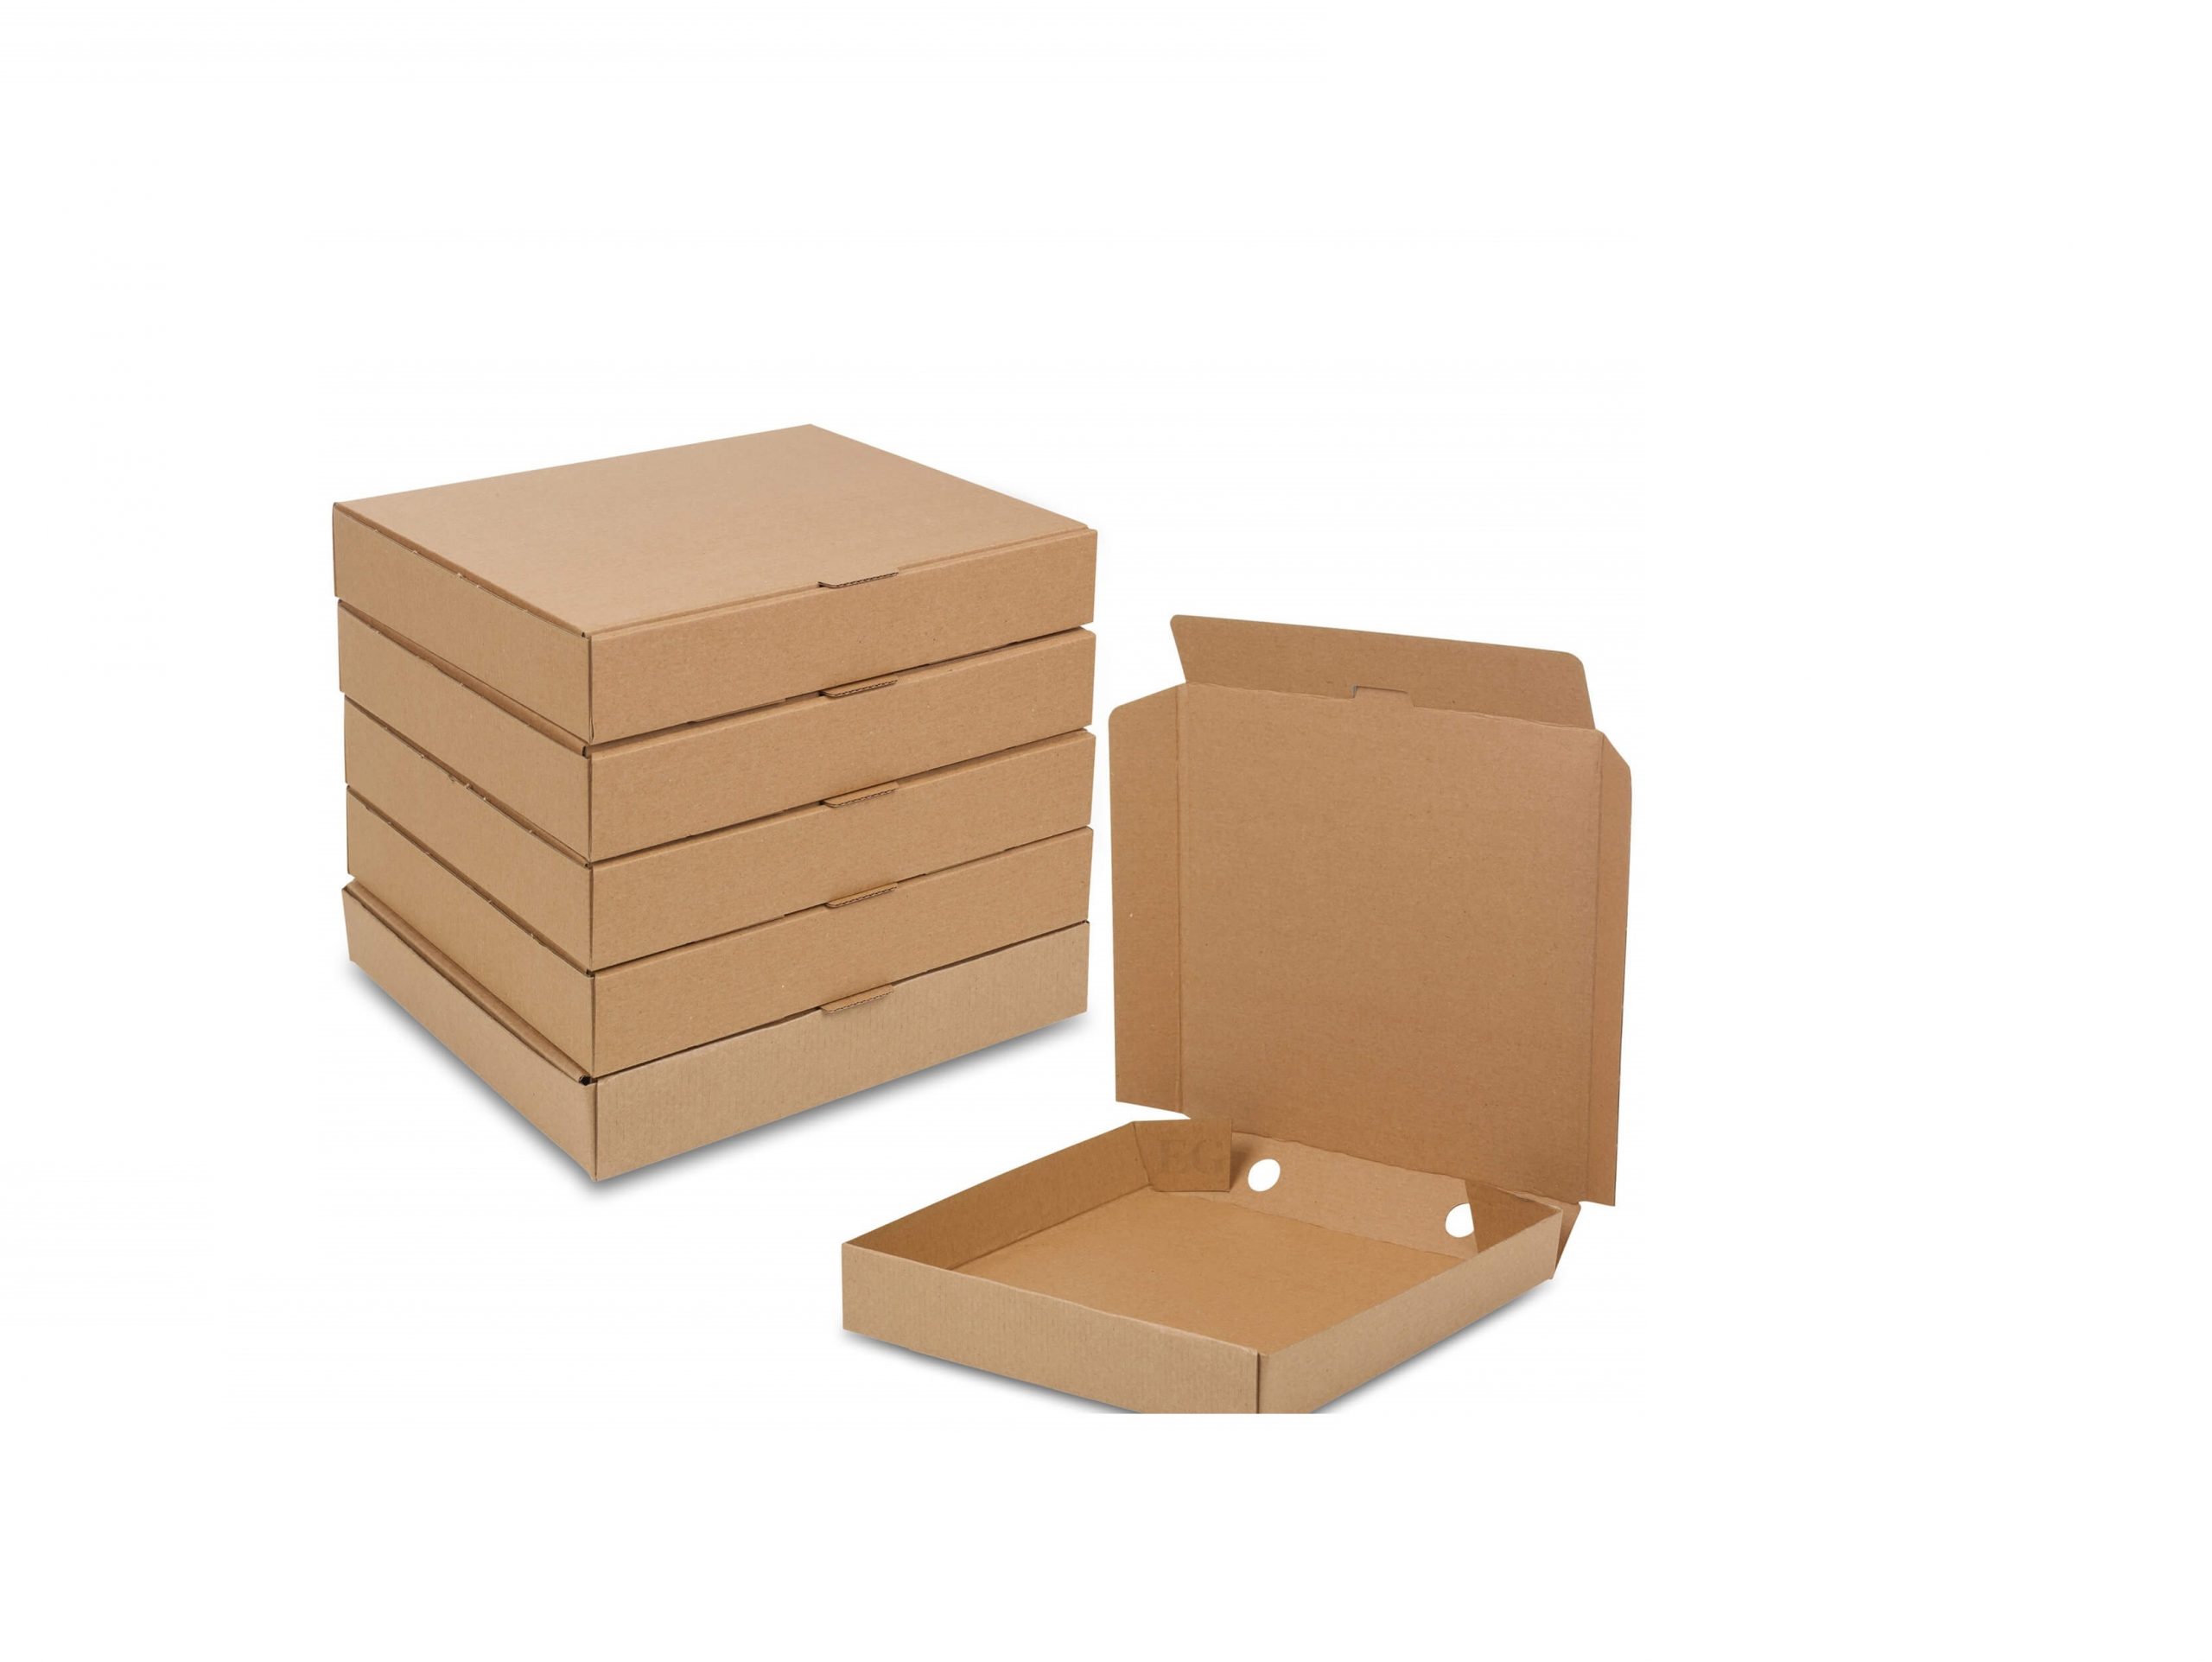 https://yigitambalaj.com.tr/wp-content/uploads/2021/05/cardboard-pizza-box-scaled.jpg